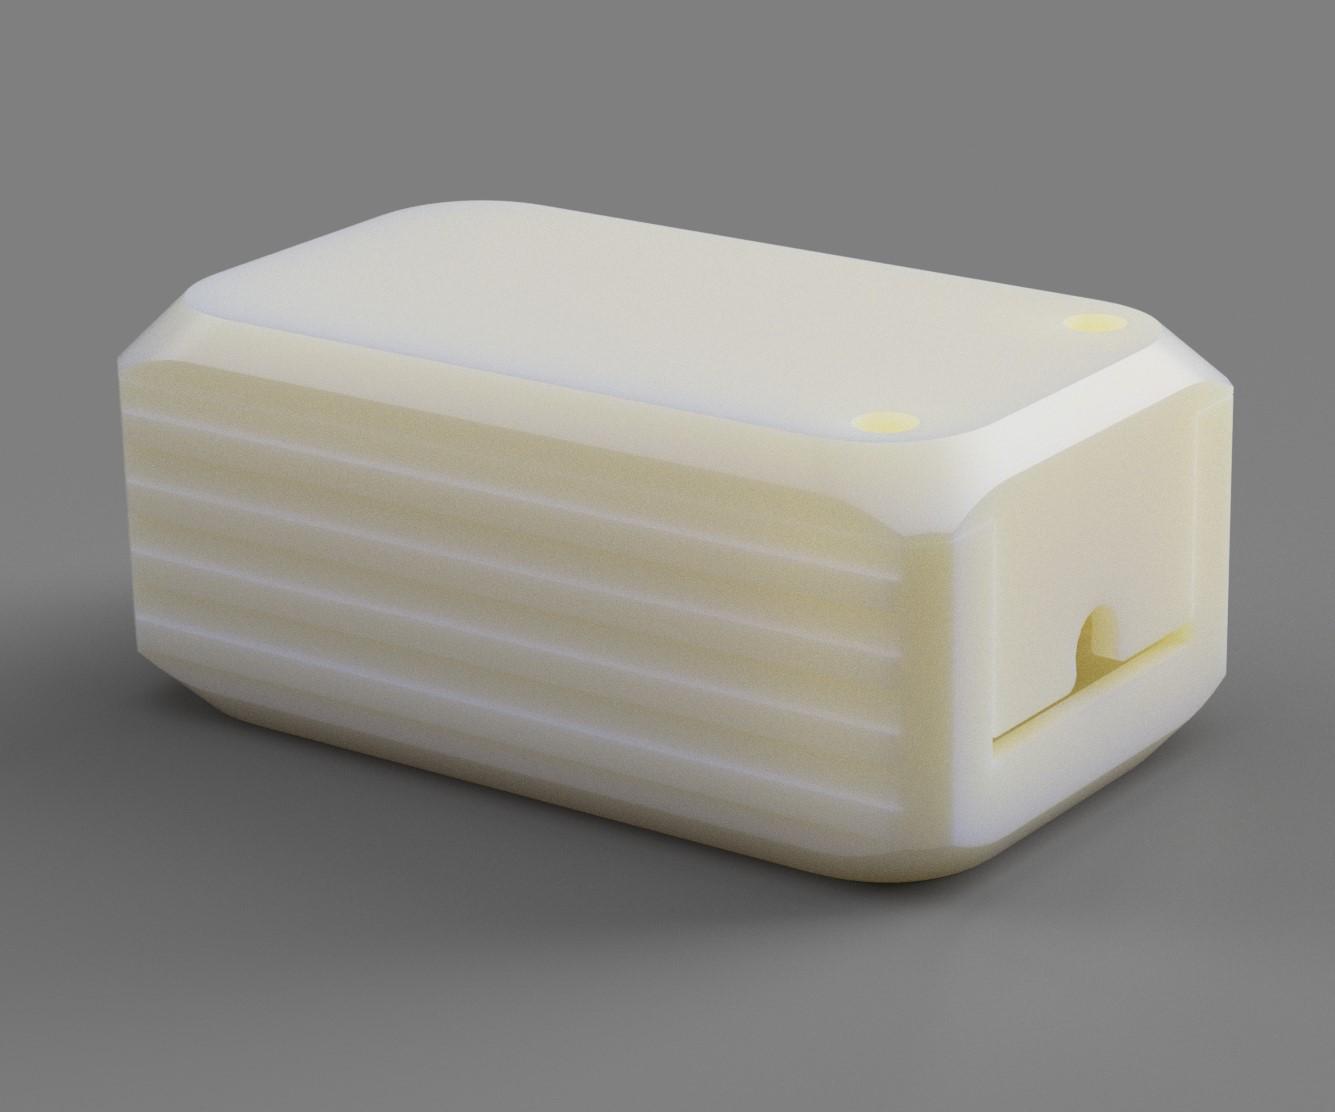 HydroGuardian - A DIY WiFi SoilSensor for Home Assistant 3d model